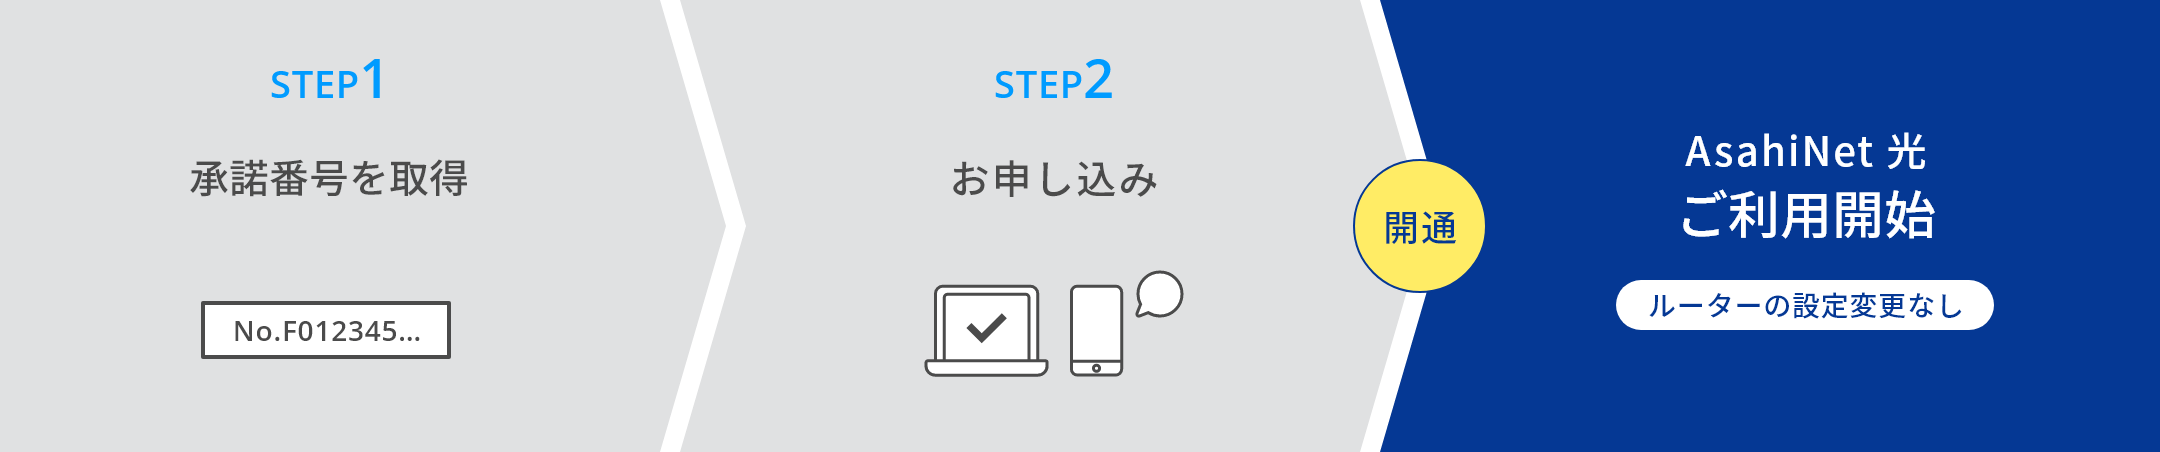 STEP1 転用承諾番号を取得 STEP2 お申し込み STEP3 AsahiNet 光ご利用開始（ルーターの設定変更なし）